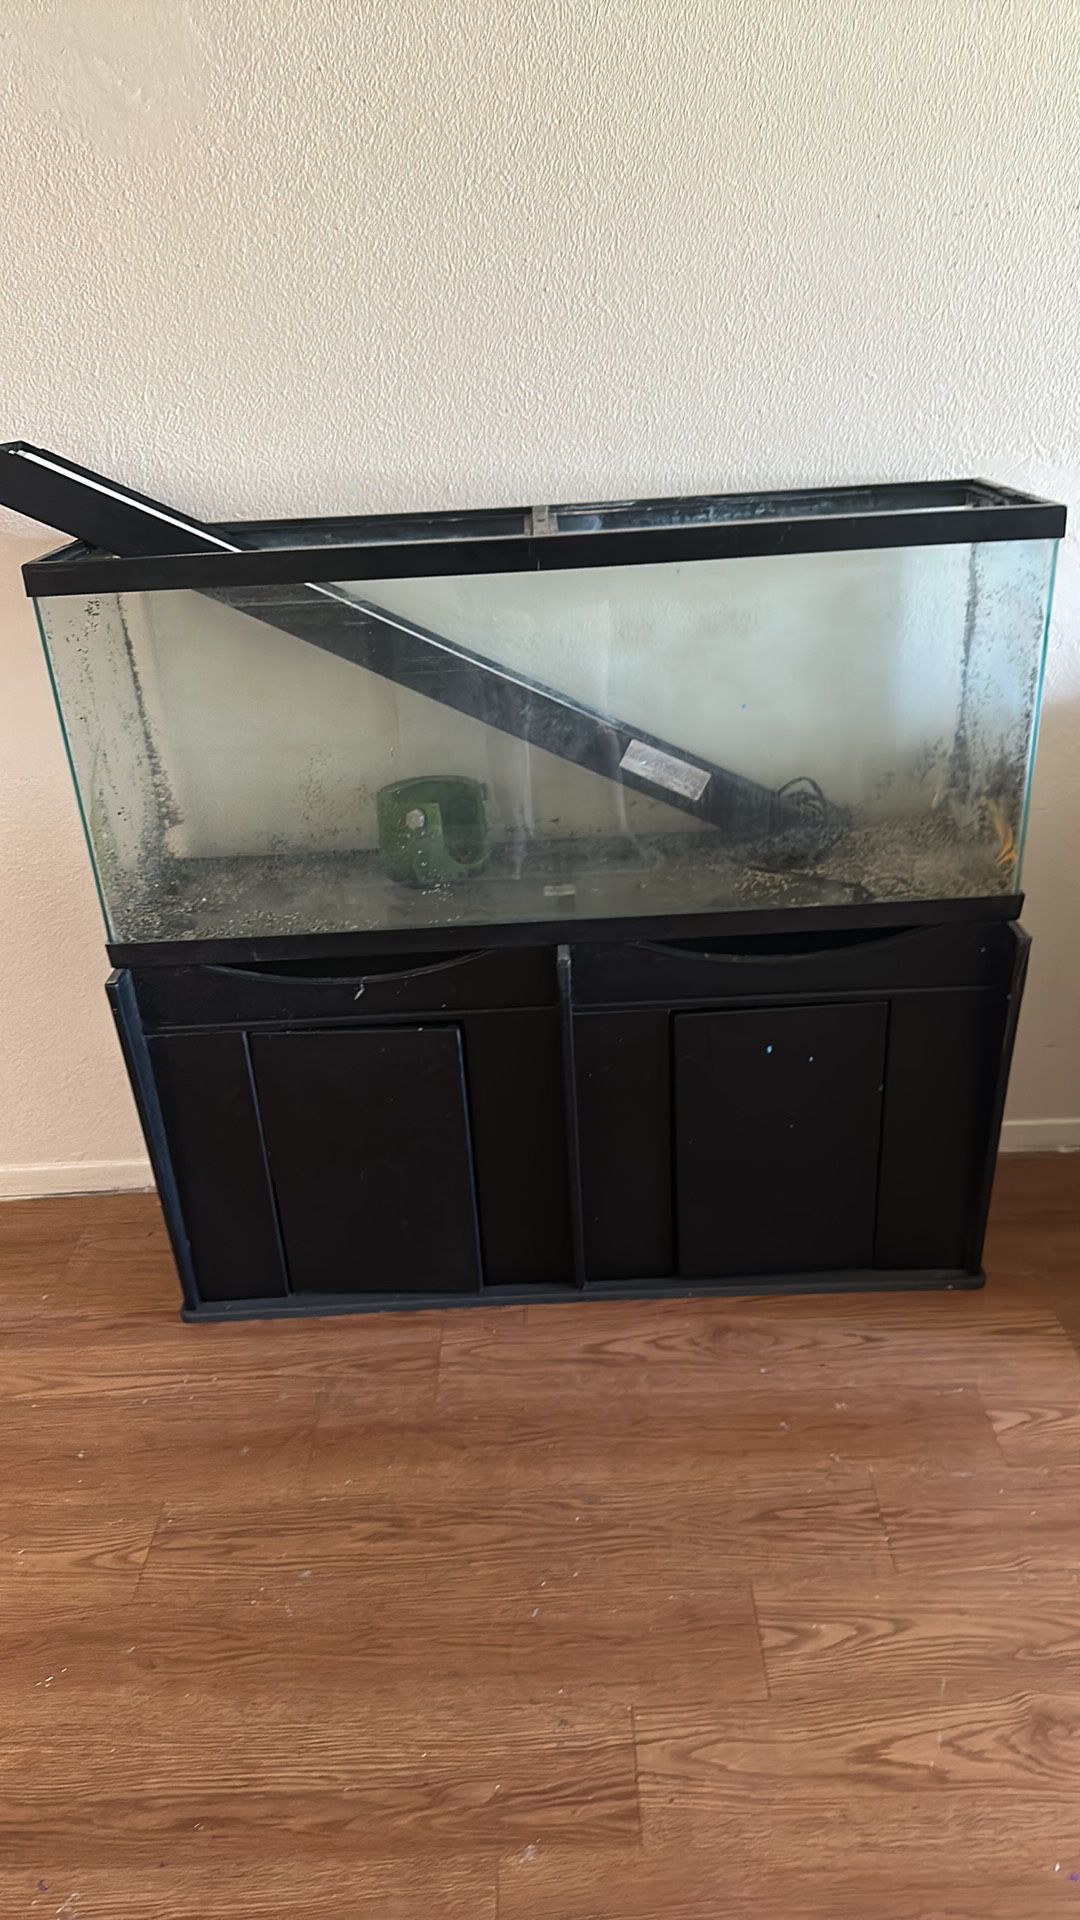 Large Fish tank